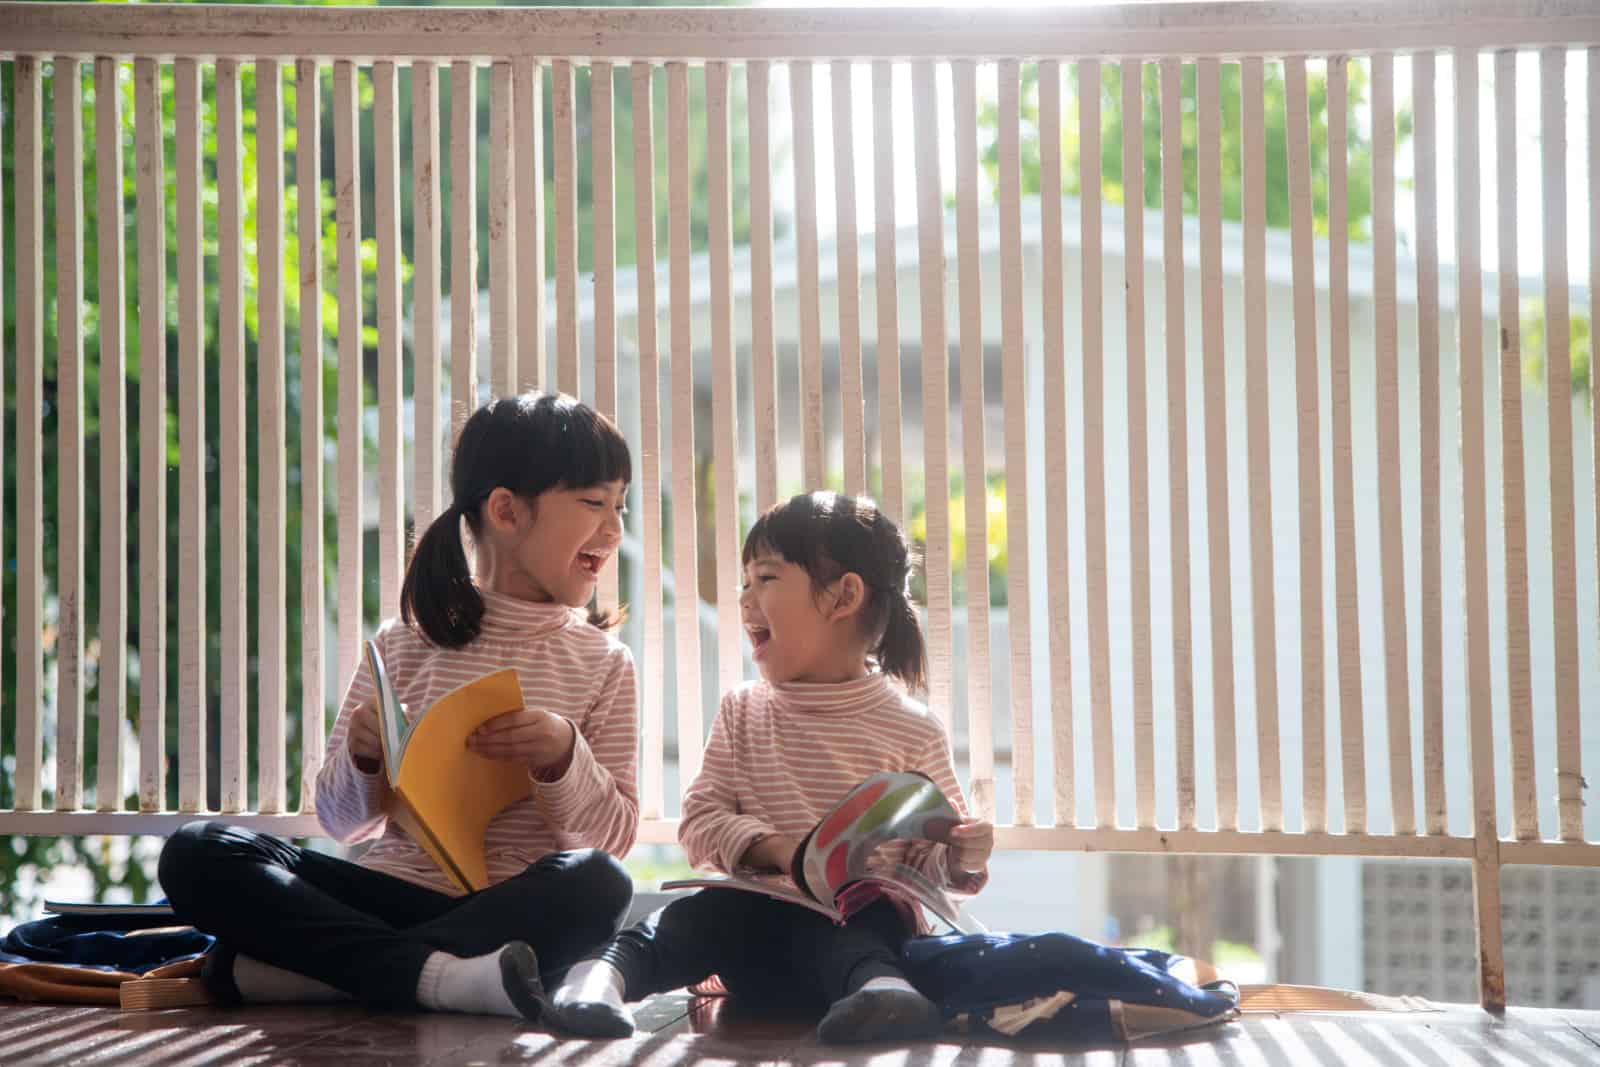 Cute Asian siblings girl reading a book at home